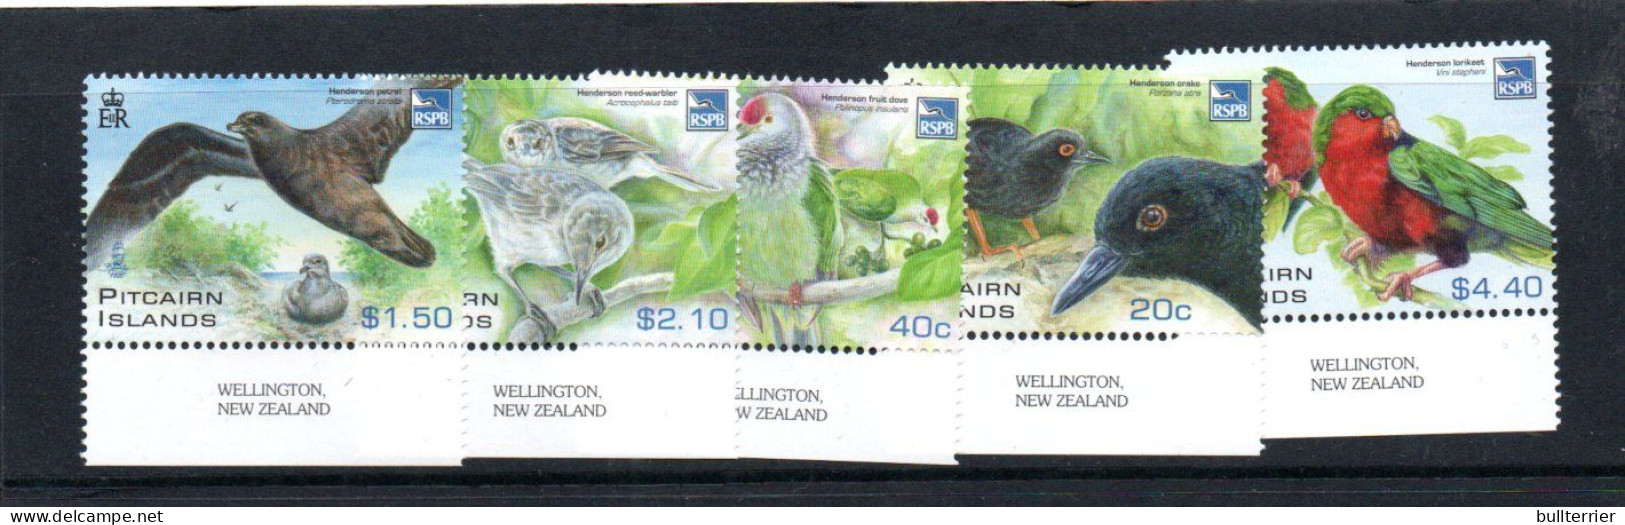 BIRDS -Pitcairn Islands - 2011- Henderson IslandRSPB Birds Set Of 5 Mint Never Hinged, SG Cat £15.25 - Tauben & Flughühner